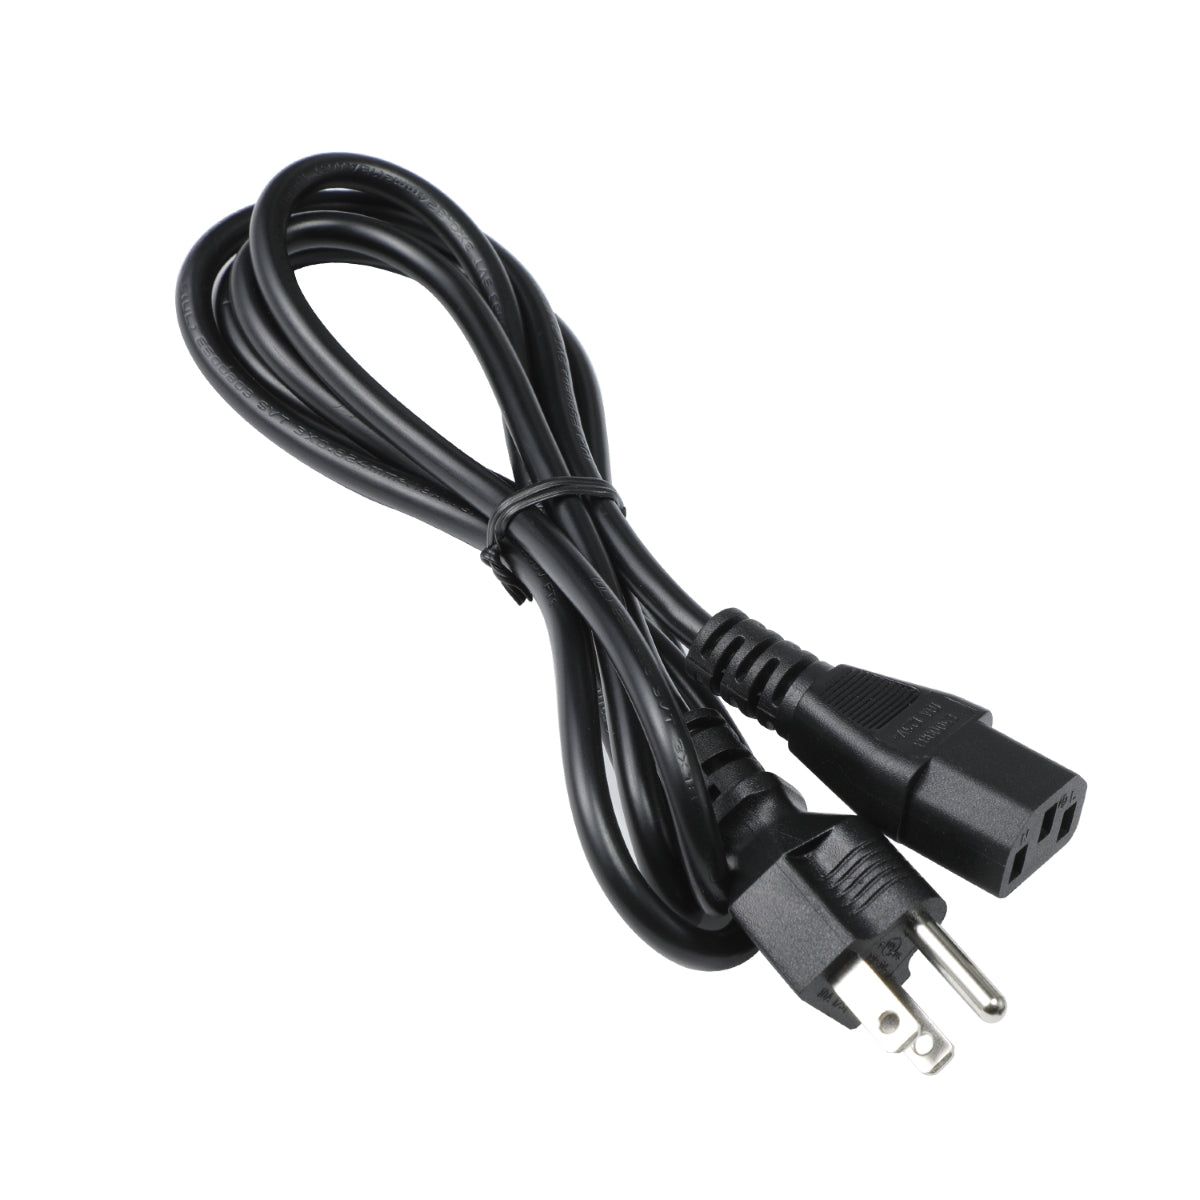 Power Cord for Dell UltraSharp U2715H Monitor